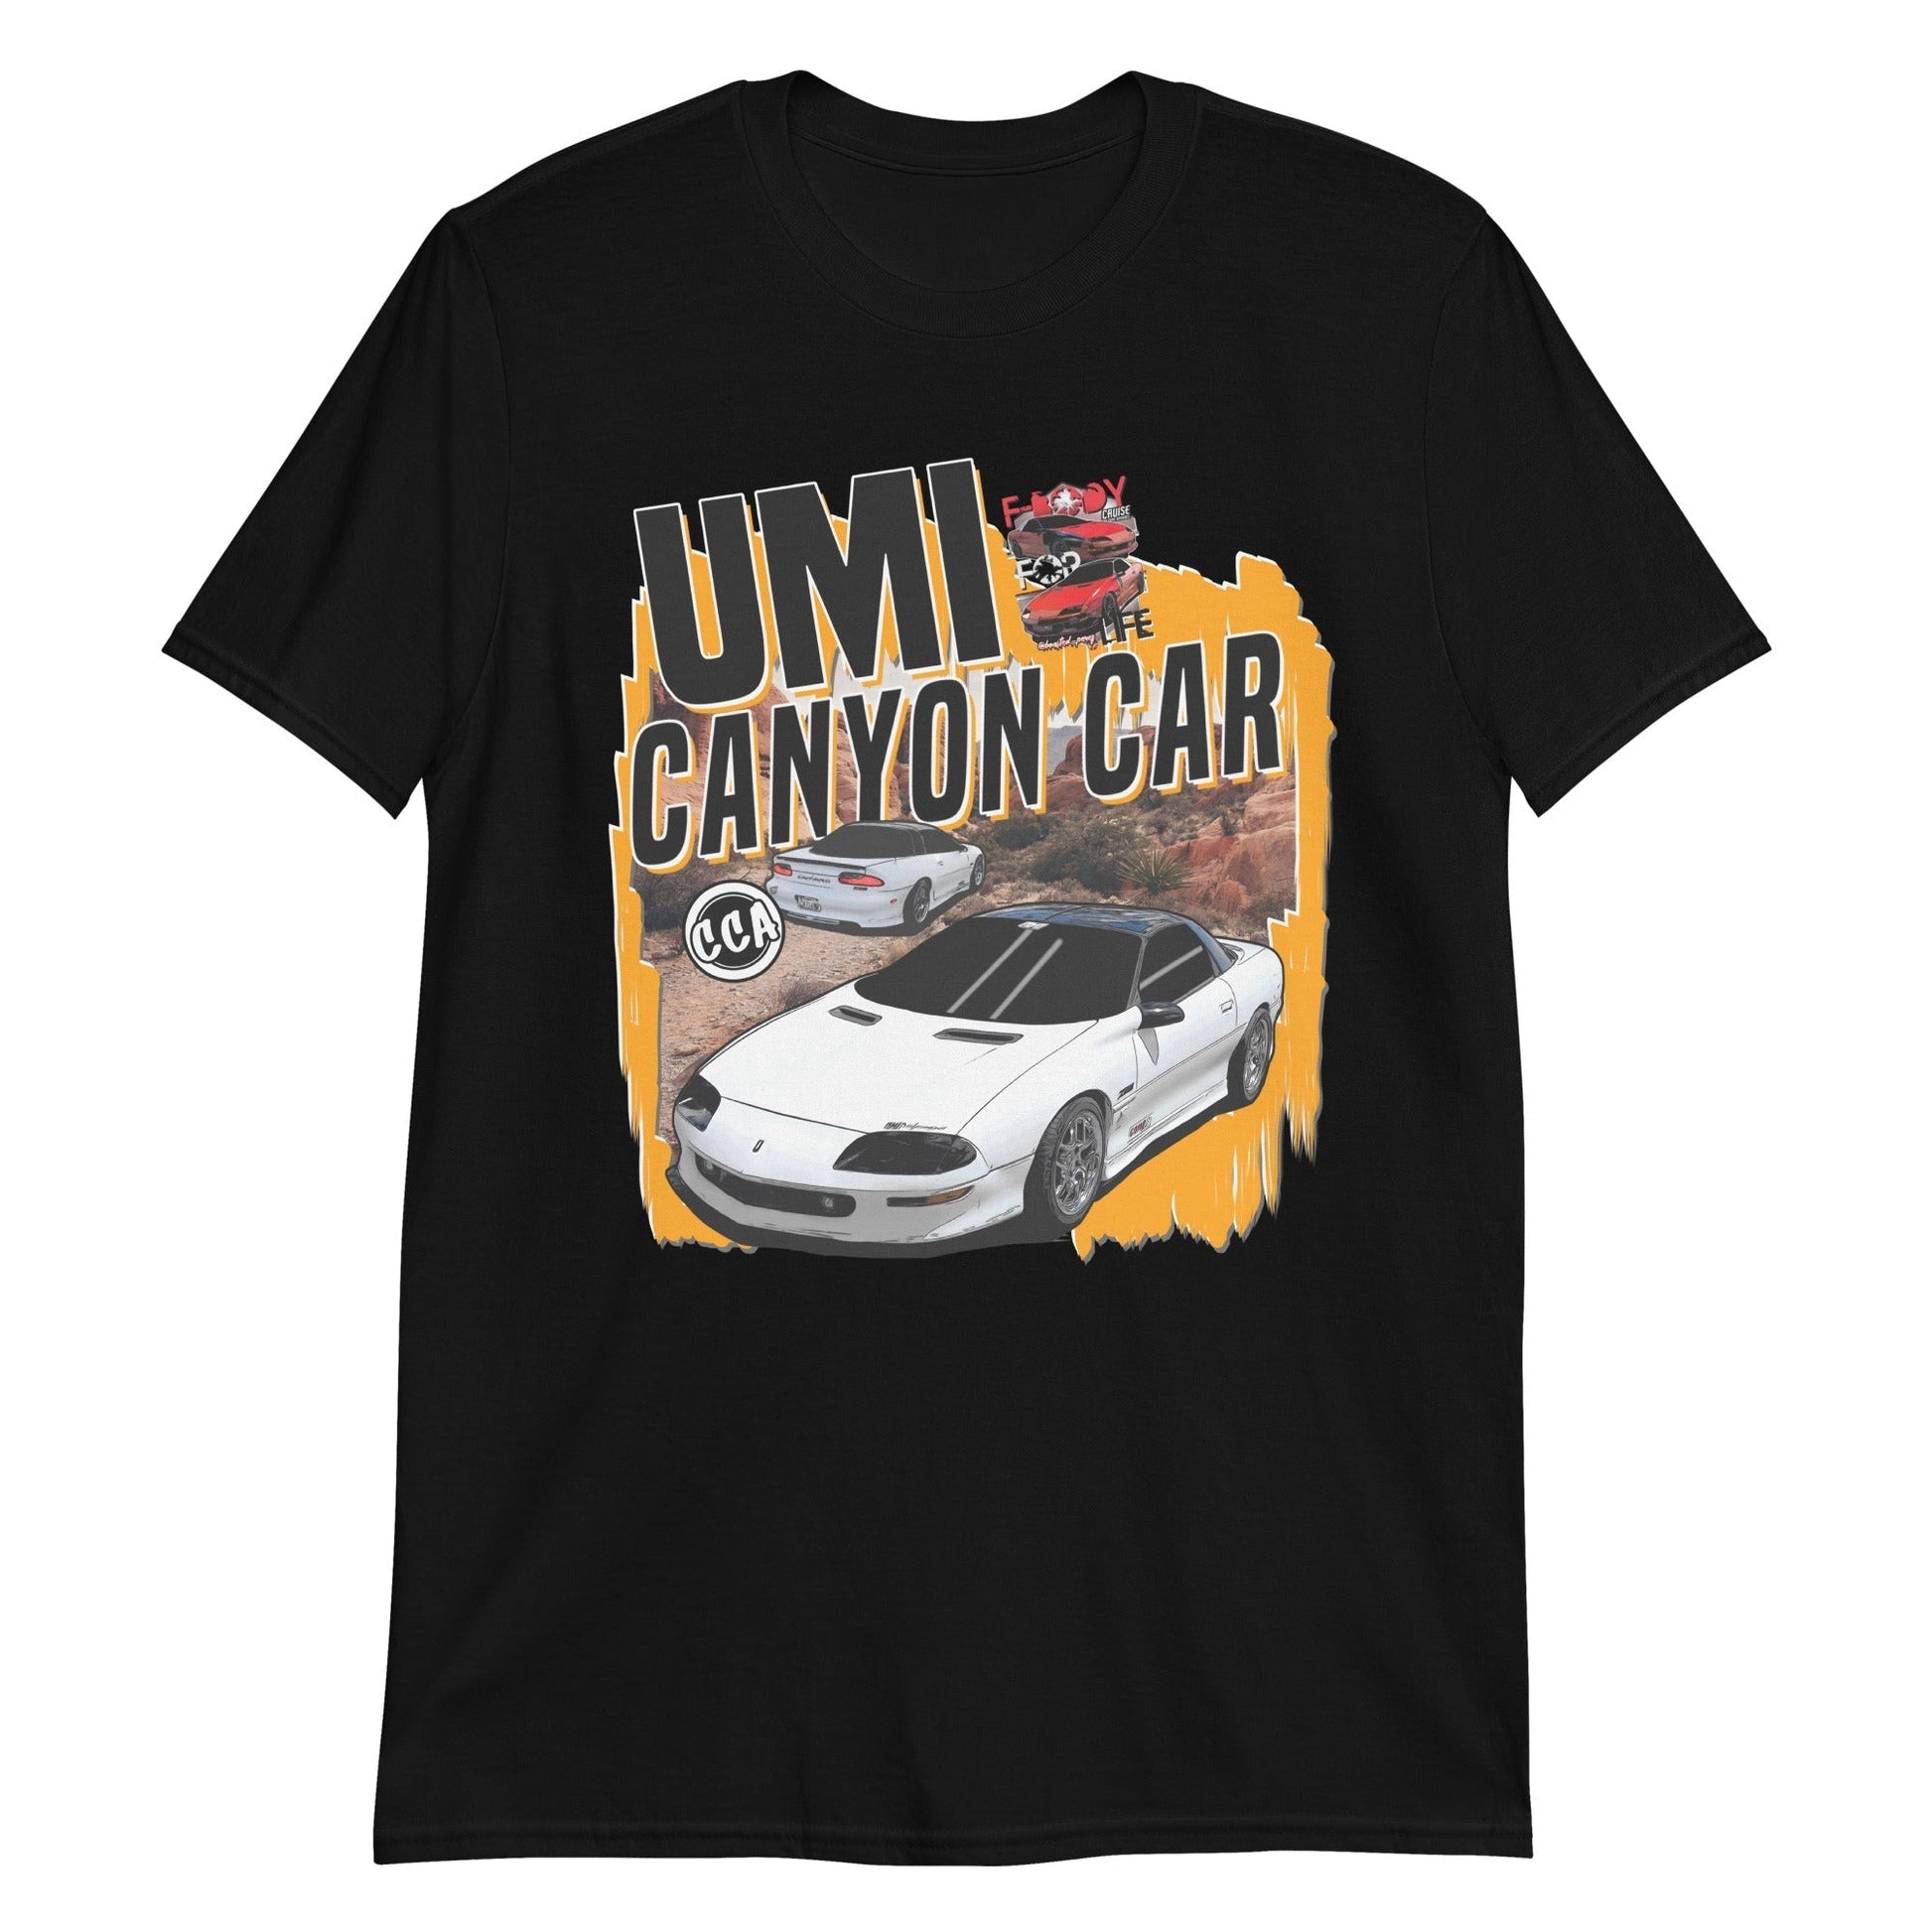 UMI Canyon Car T-Shirt Front